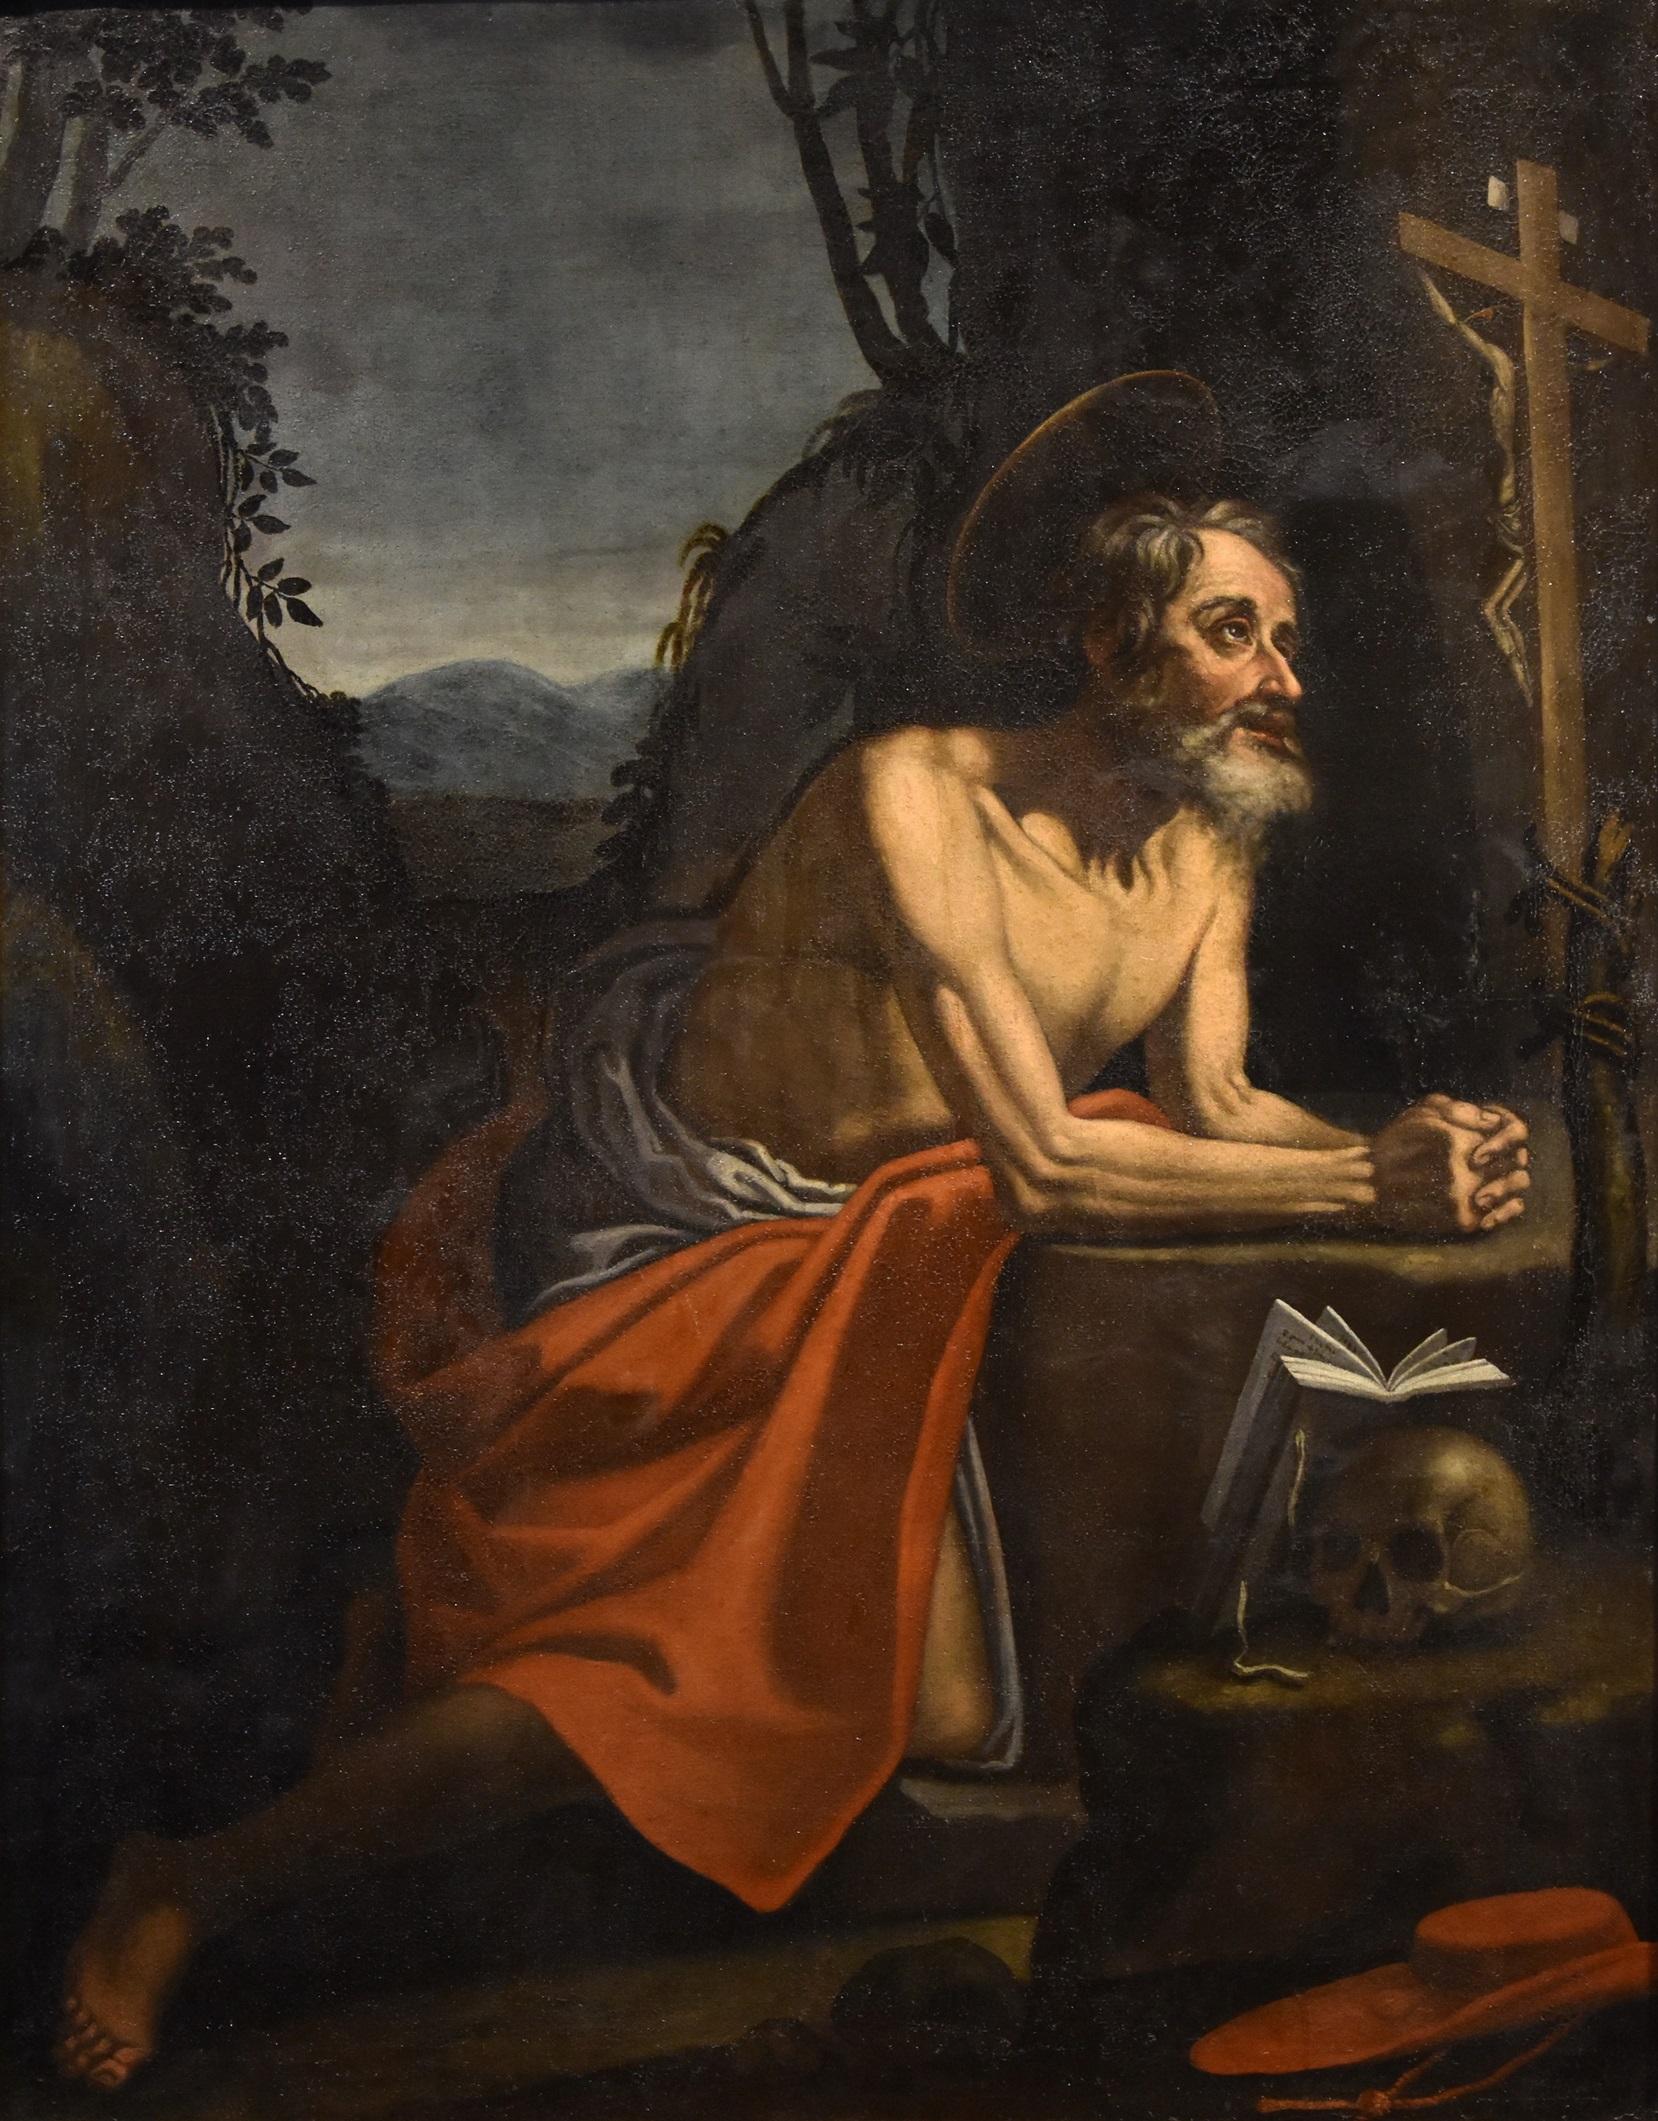 Saint Jerome De Somer Paint Oil on canvas 17th Century Old master Flemish Art - Painting by Hendrick De Somer (lokeren 1602 - Naples 1655)